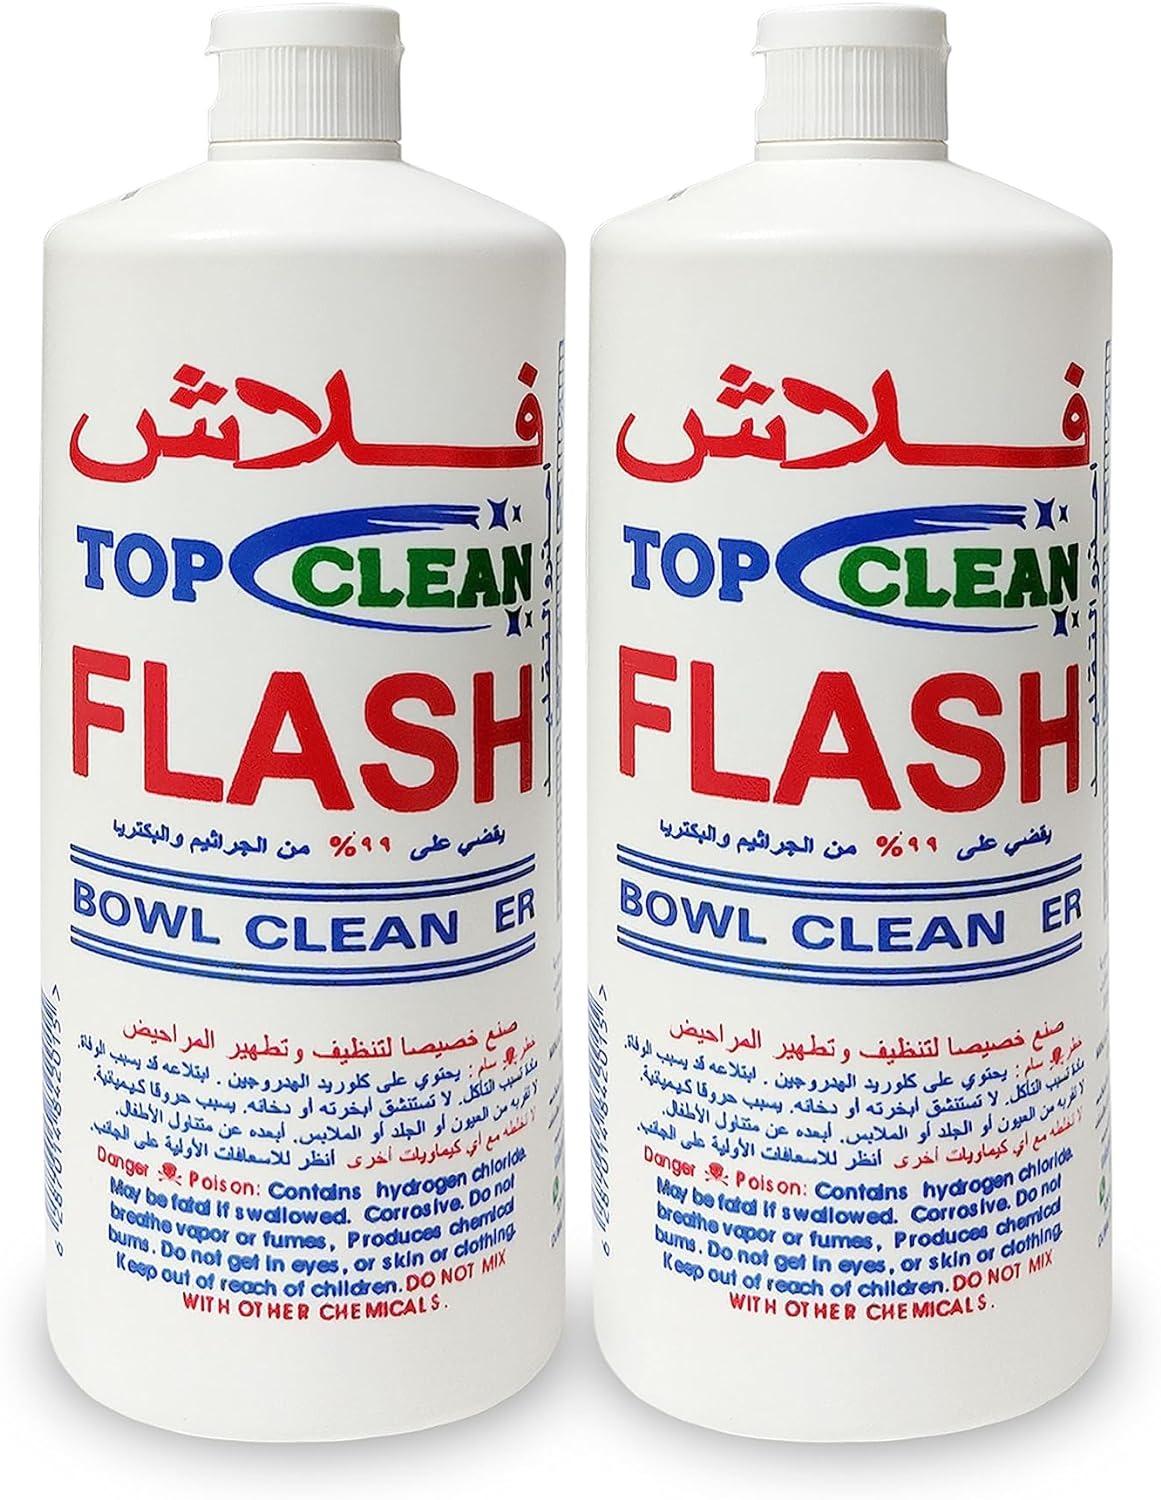 Top Clean Flash Bowl Cleaner 1.2L